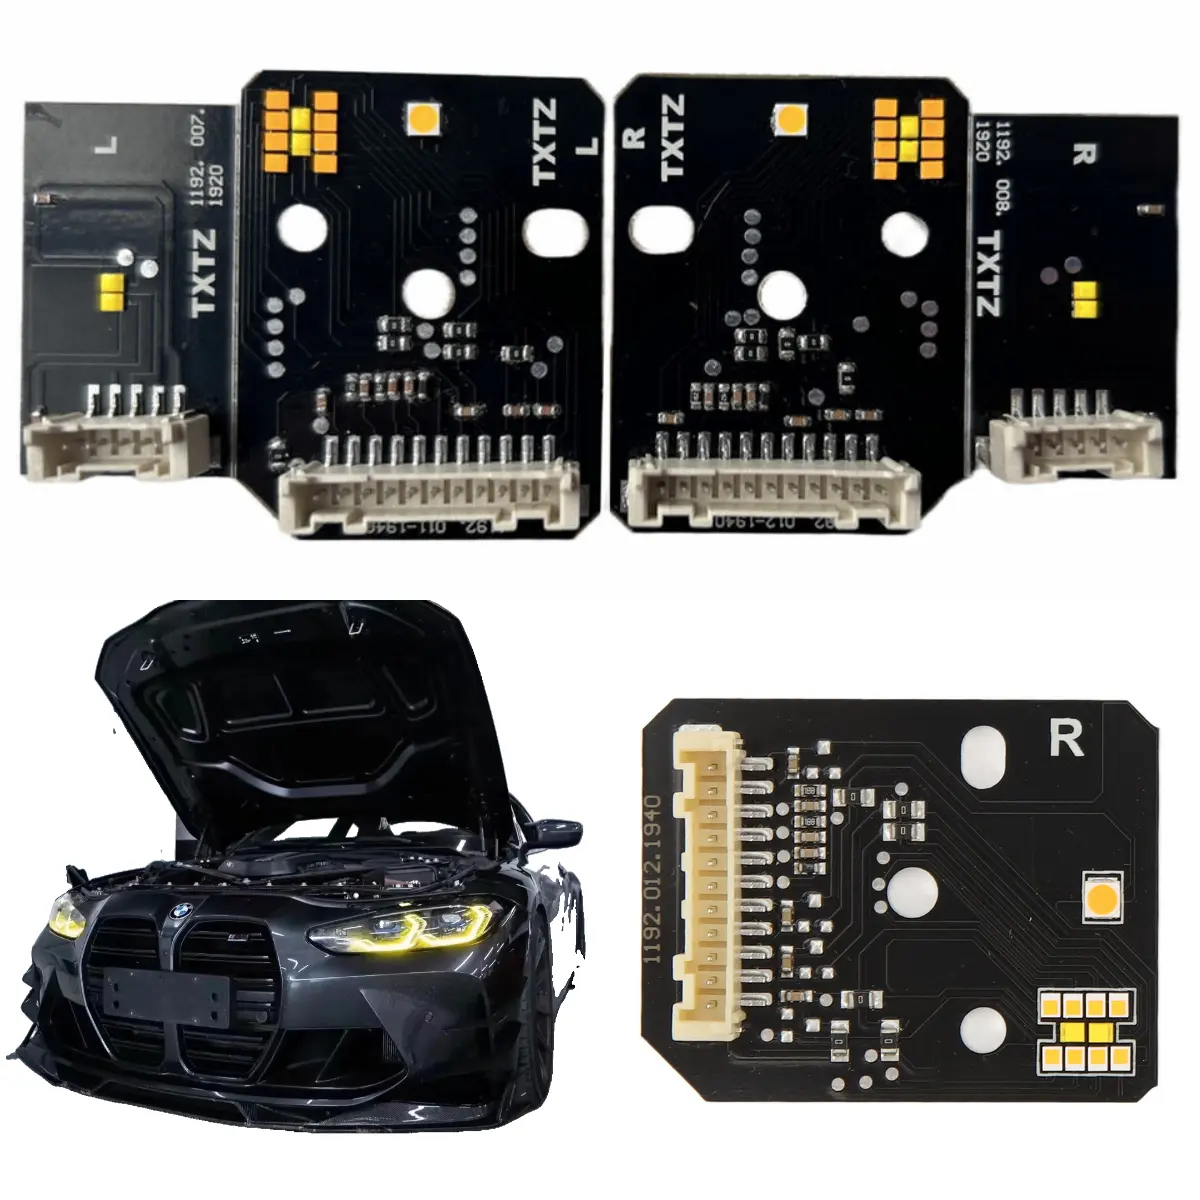 Gele Drl Led Modules Board Set Voor M3 G80 M4 G82 G83 G22 Laser Koplamp Us Spec 2021 En Verder Auto-Accessoires